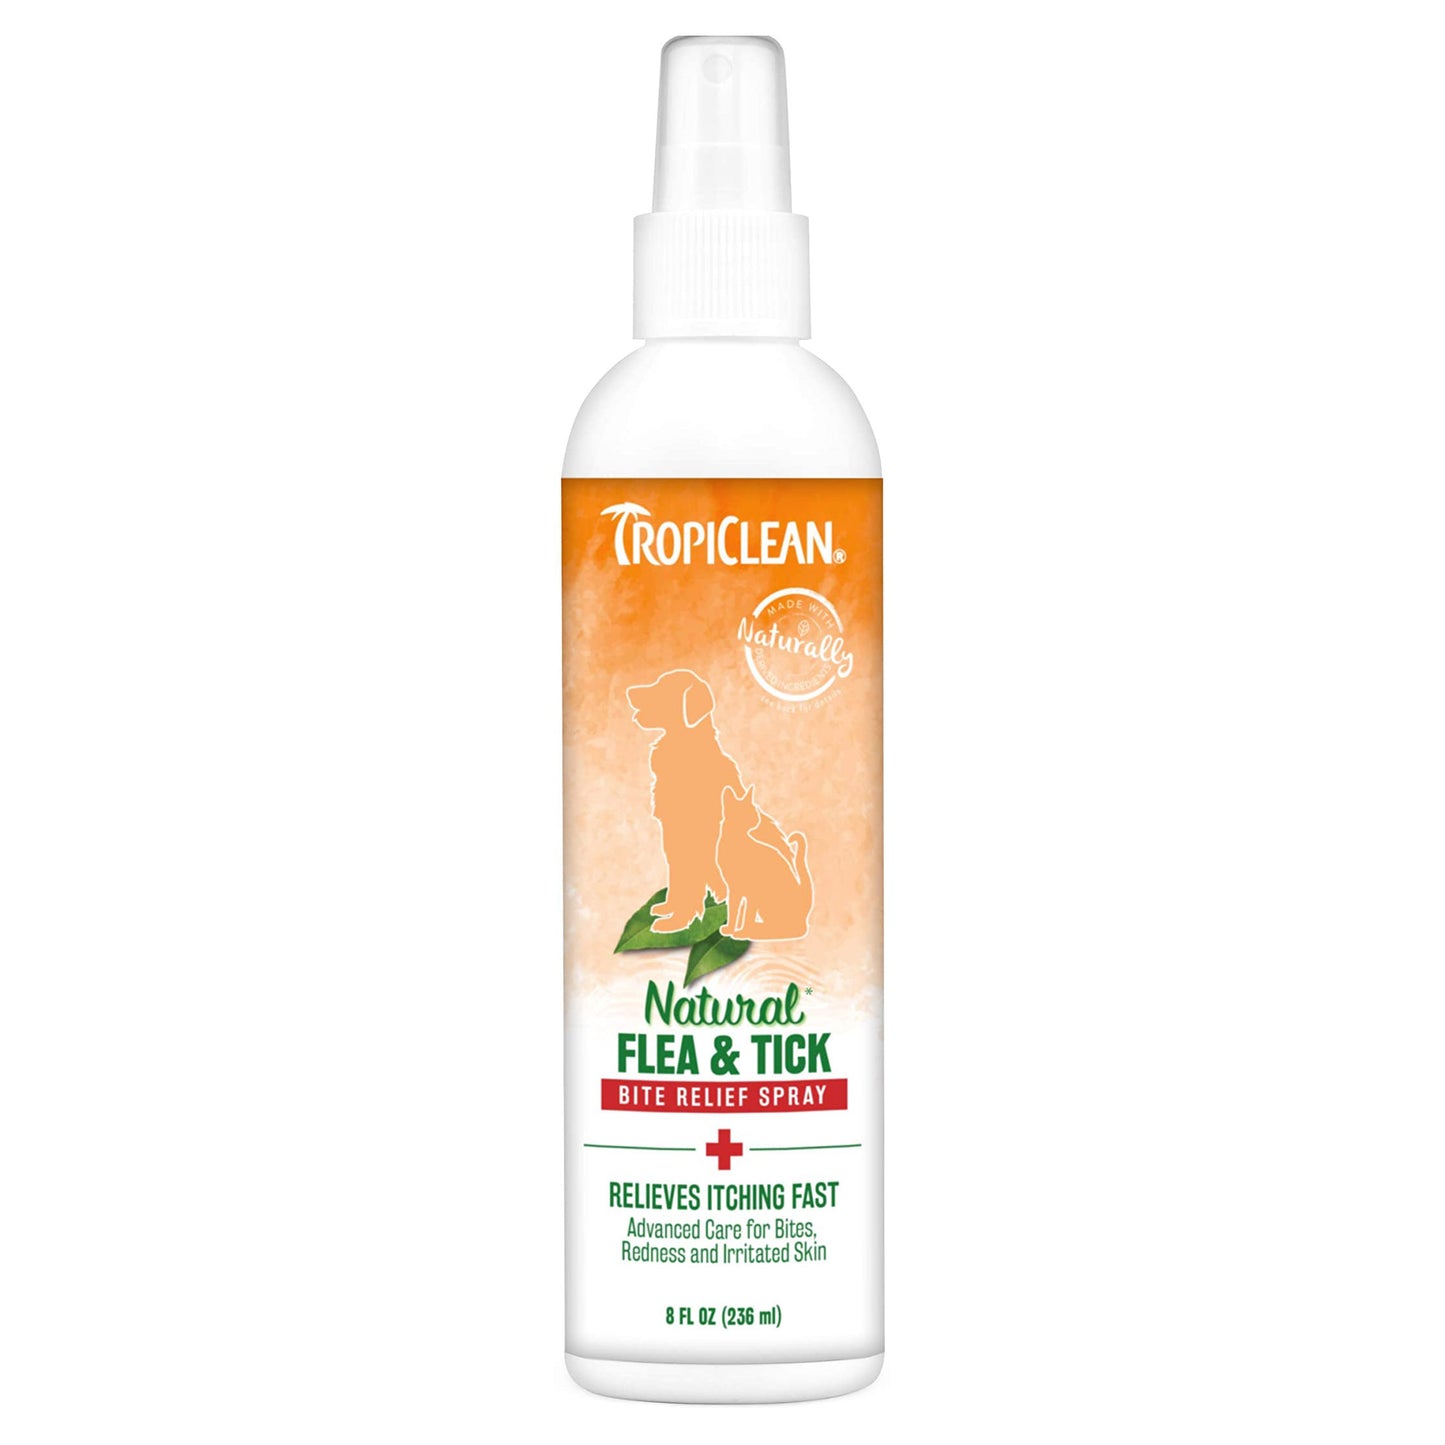 Tropiclean Natural Flea & Tick Bite Relief Spray  Image